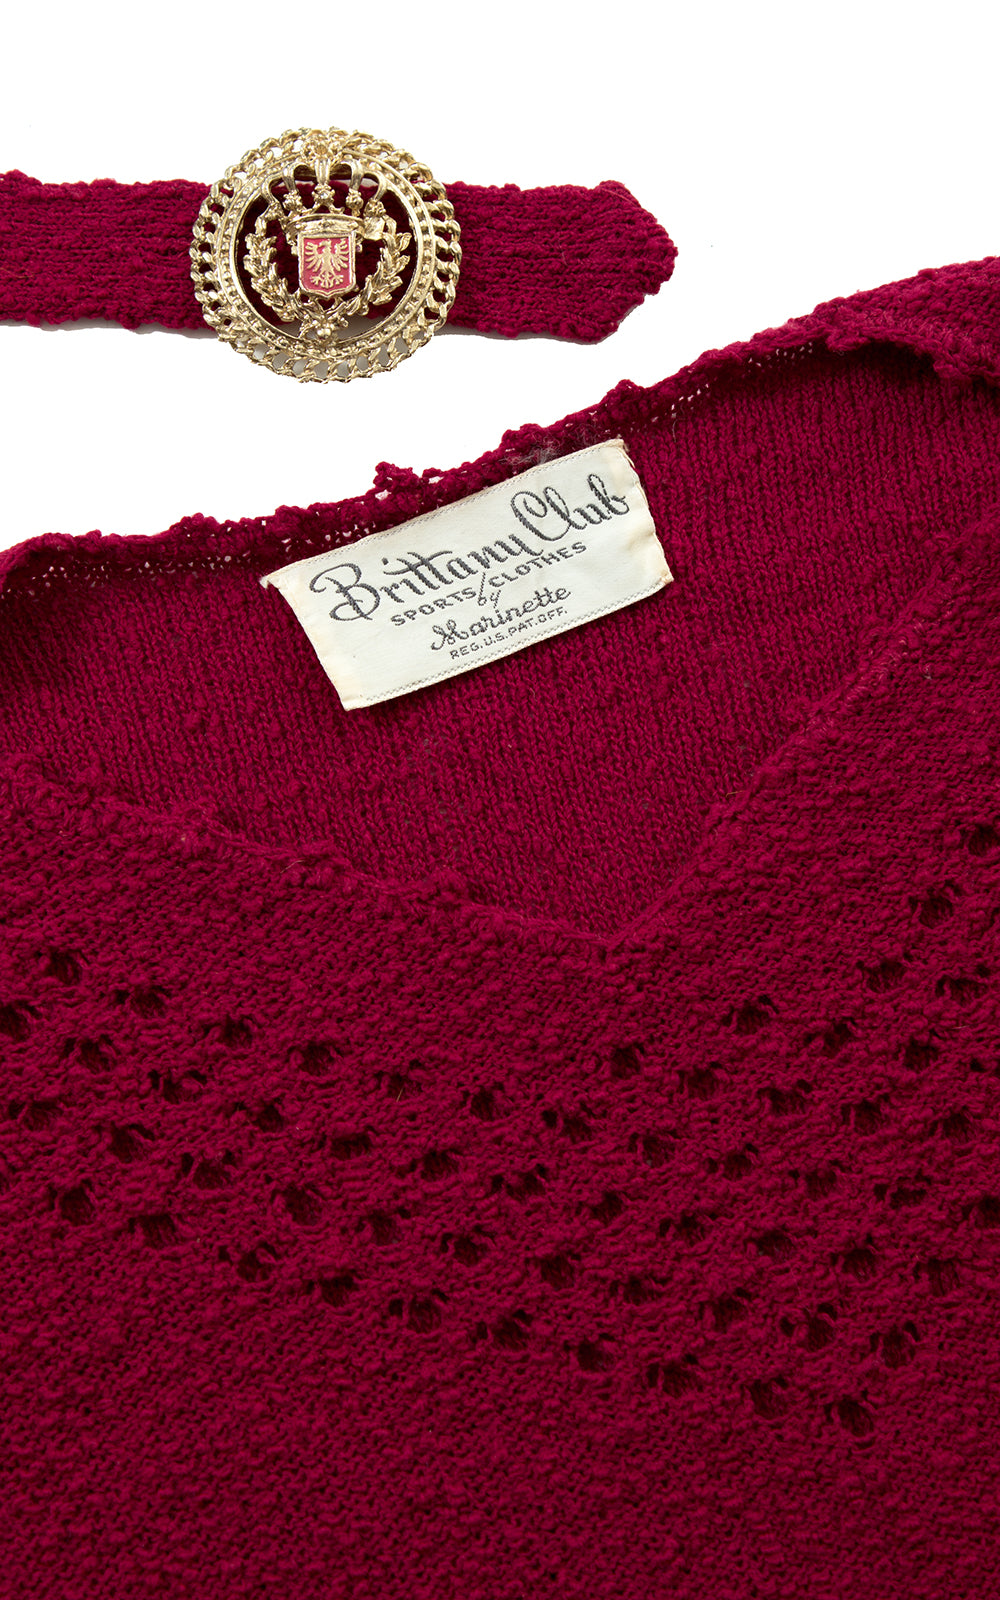 1950s Cranberry Knit Wool Sweater 3-Piece Set